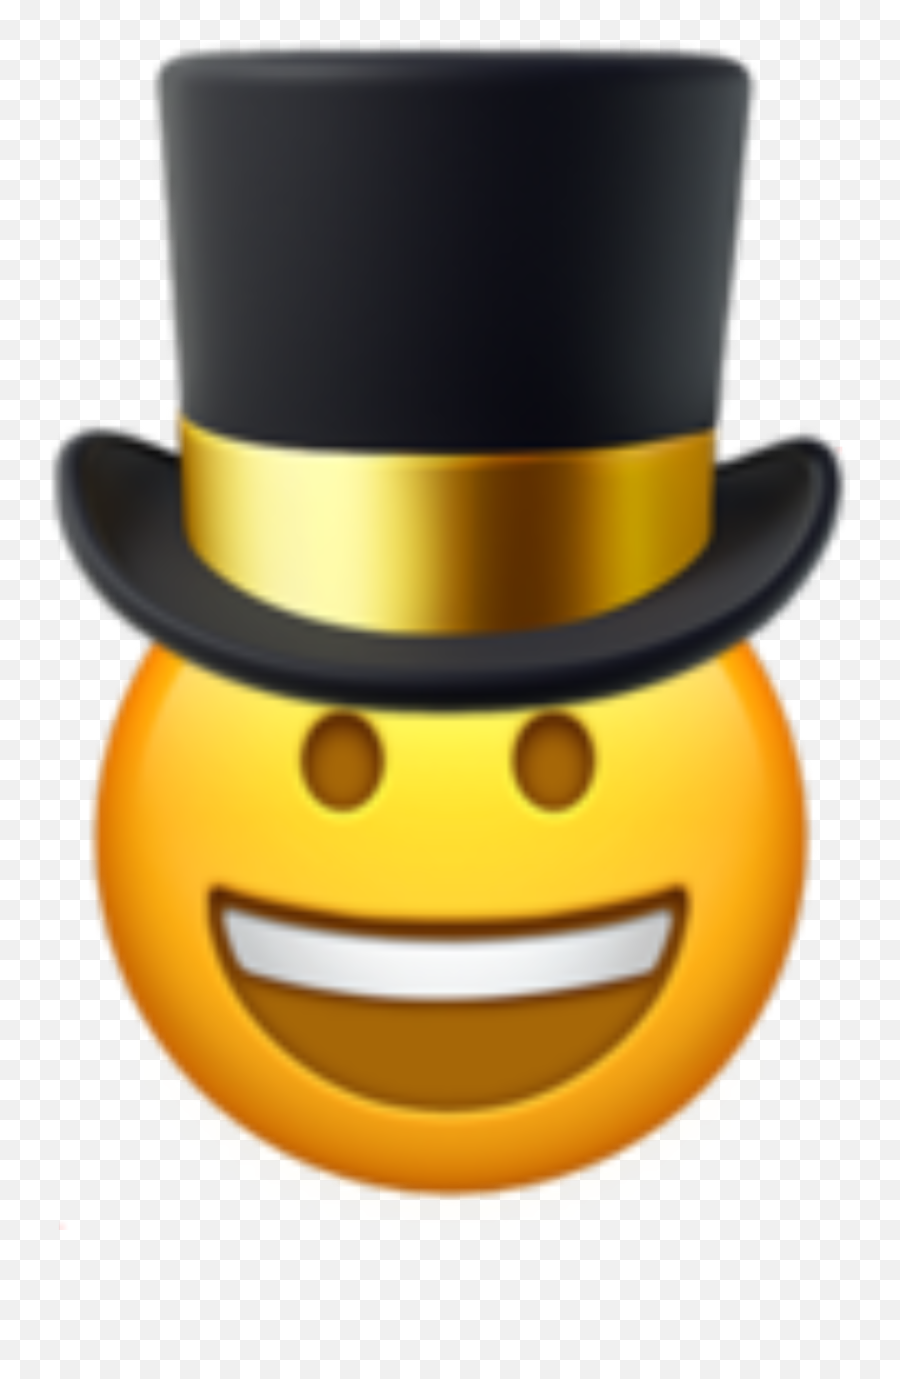 Tophat Abrahamlincoln Uwu Oh Wait I - Apple Emojis,Top Hat Emoticon